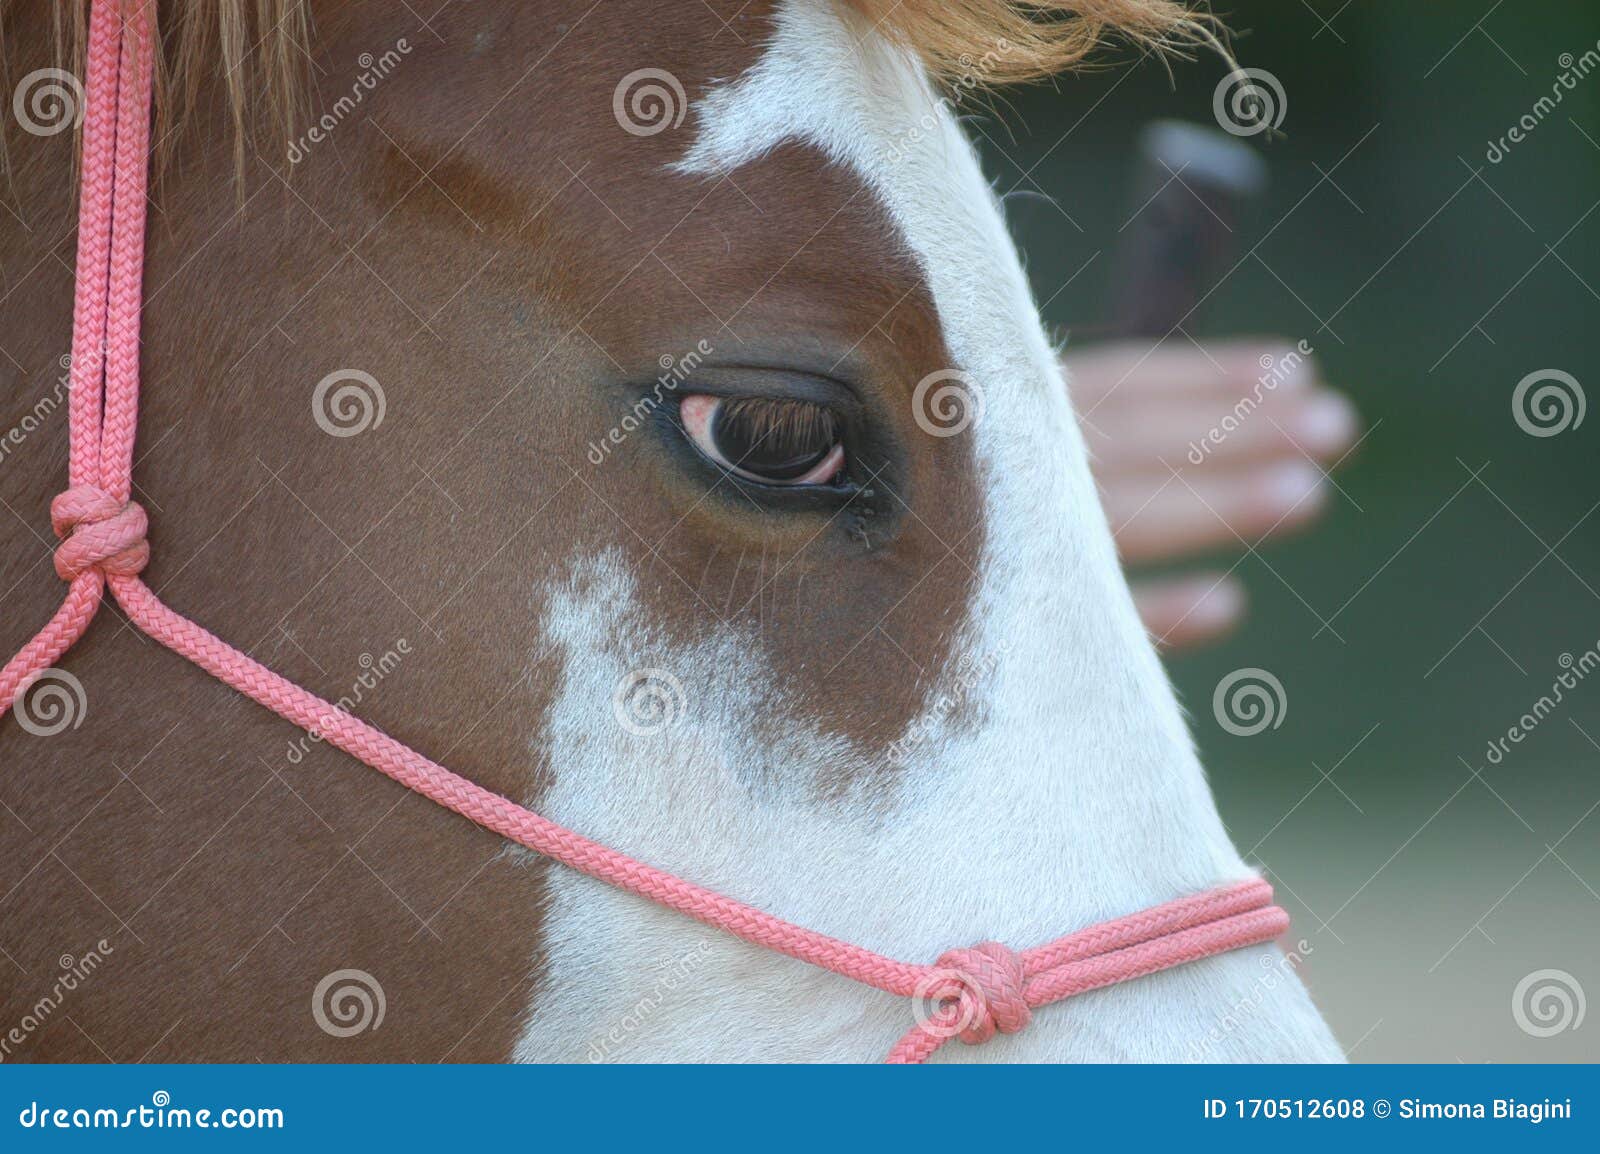 paint horse, particular eyes